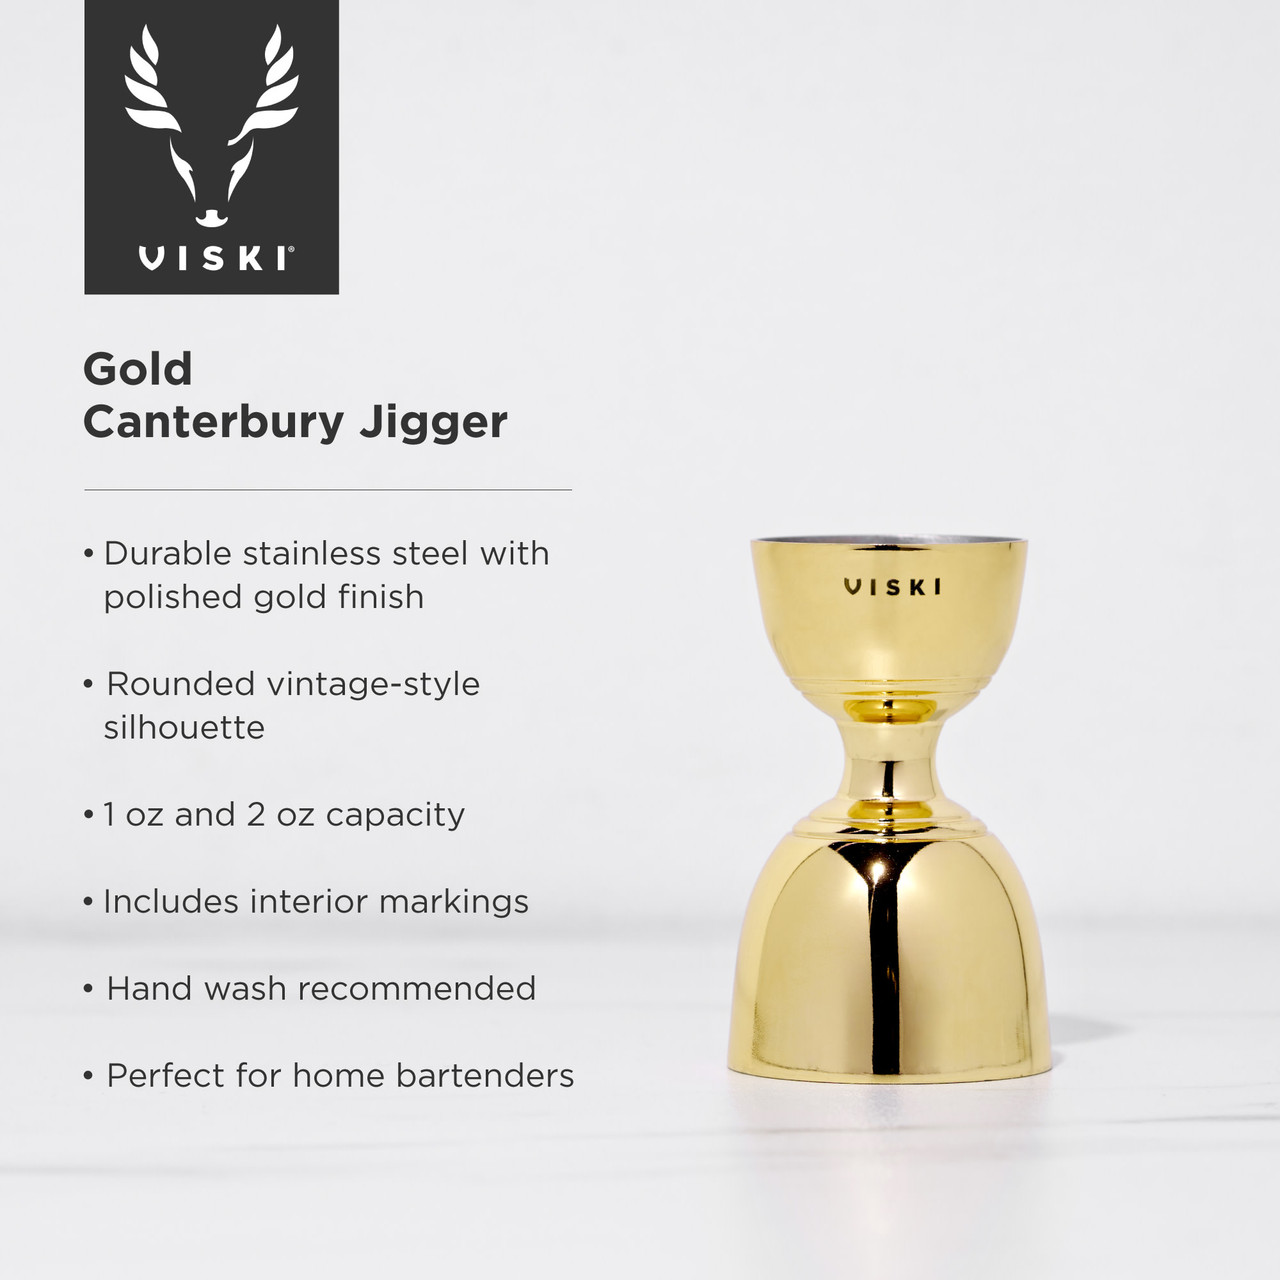 Gold Canterbury Jigger by Viski®